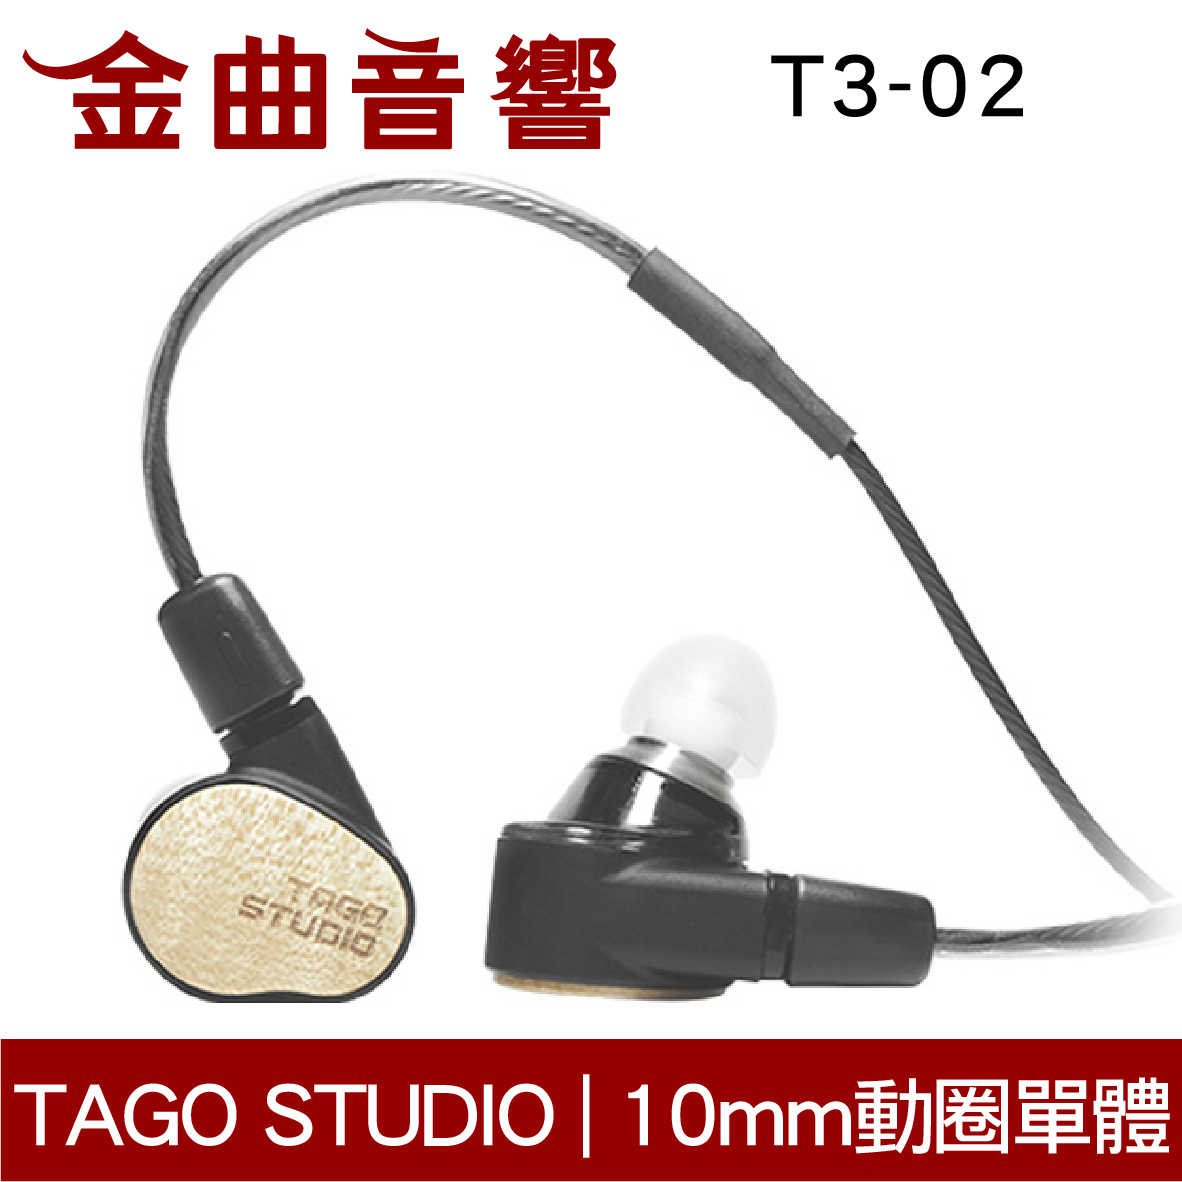 TAGO STUDIO T3-02 日本 楓木外殼 專業 監聽耳機 入耳式耳機 | 金曲音響